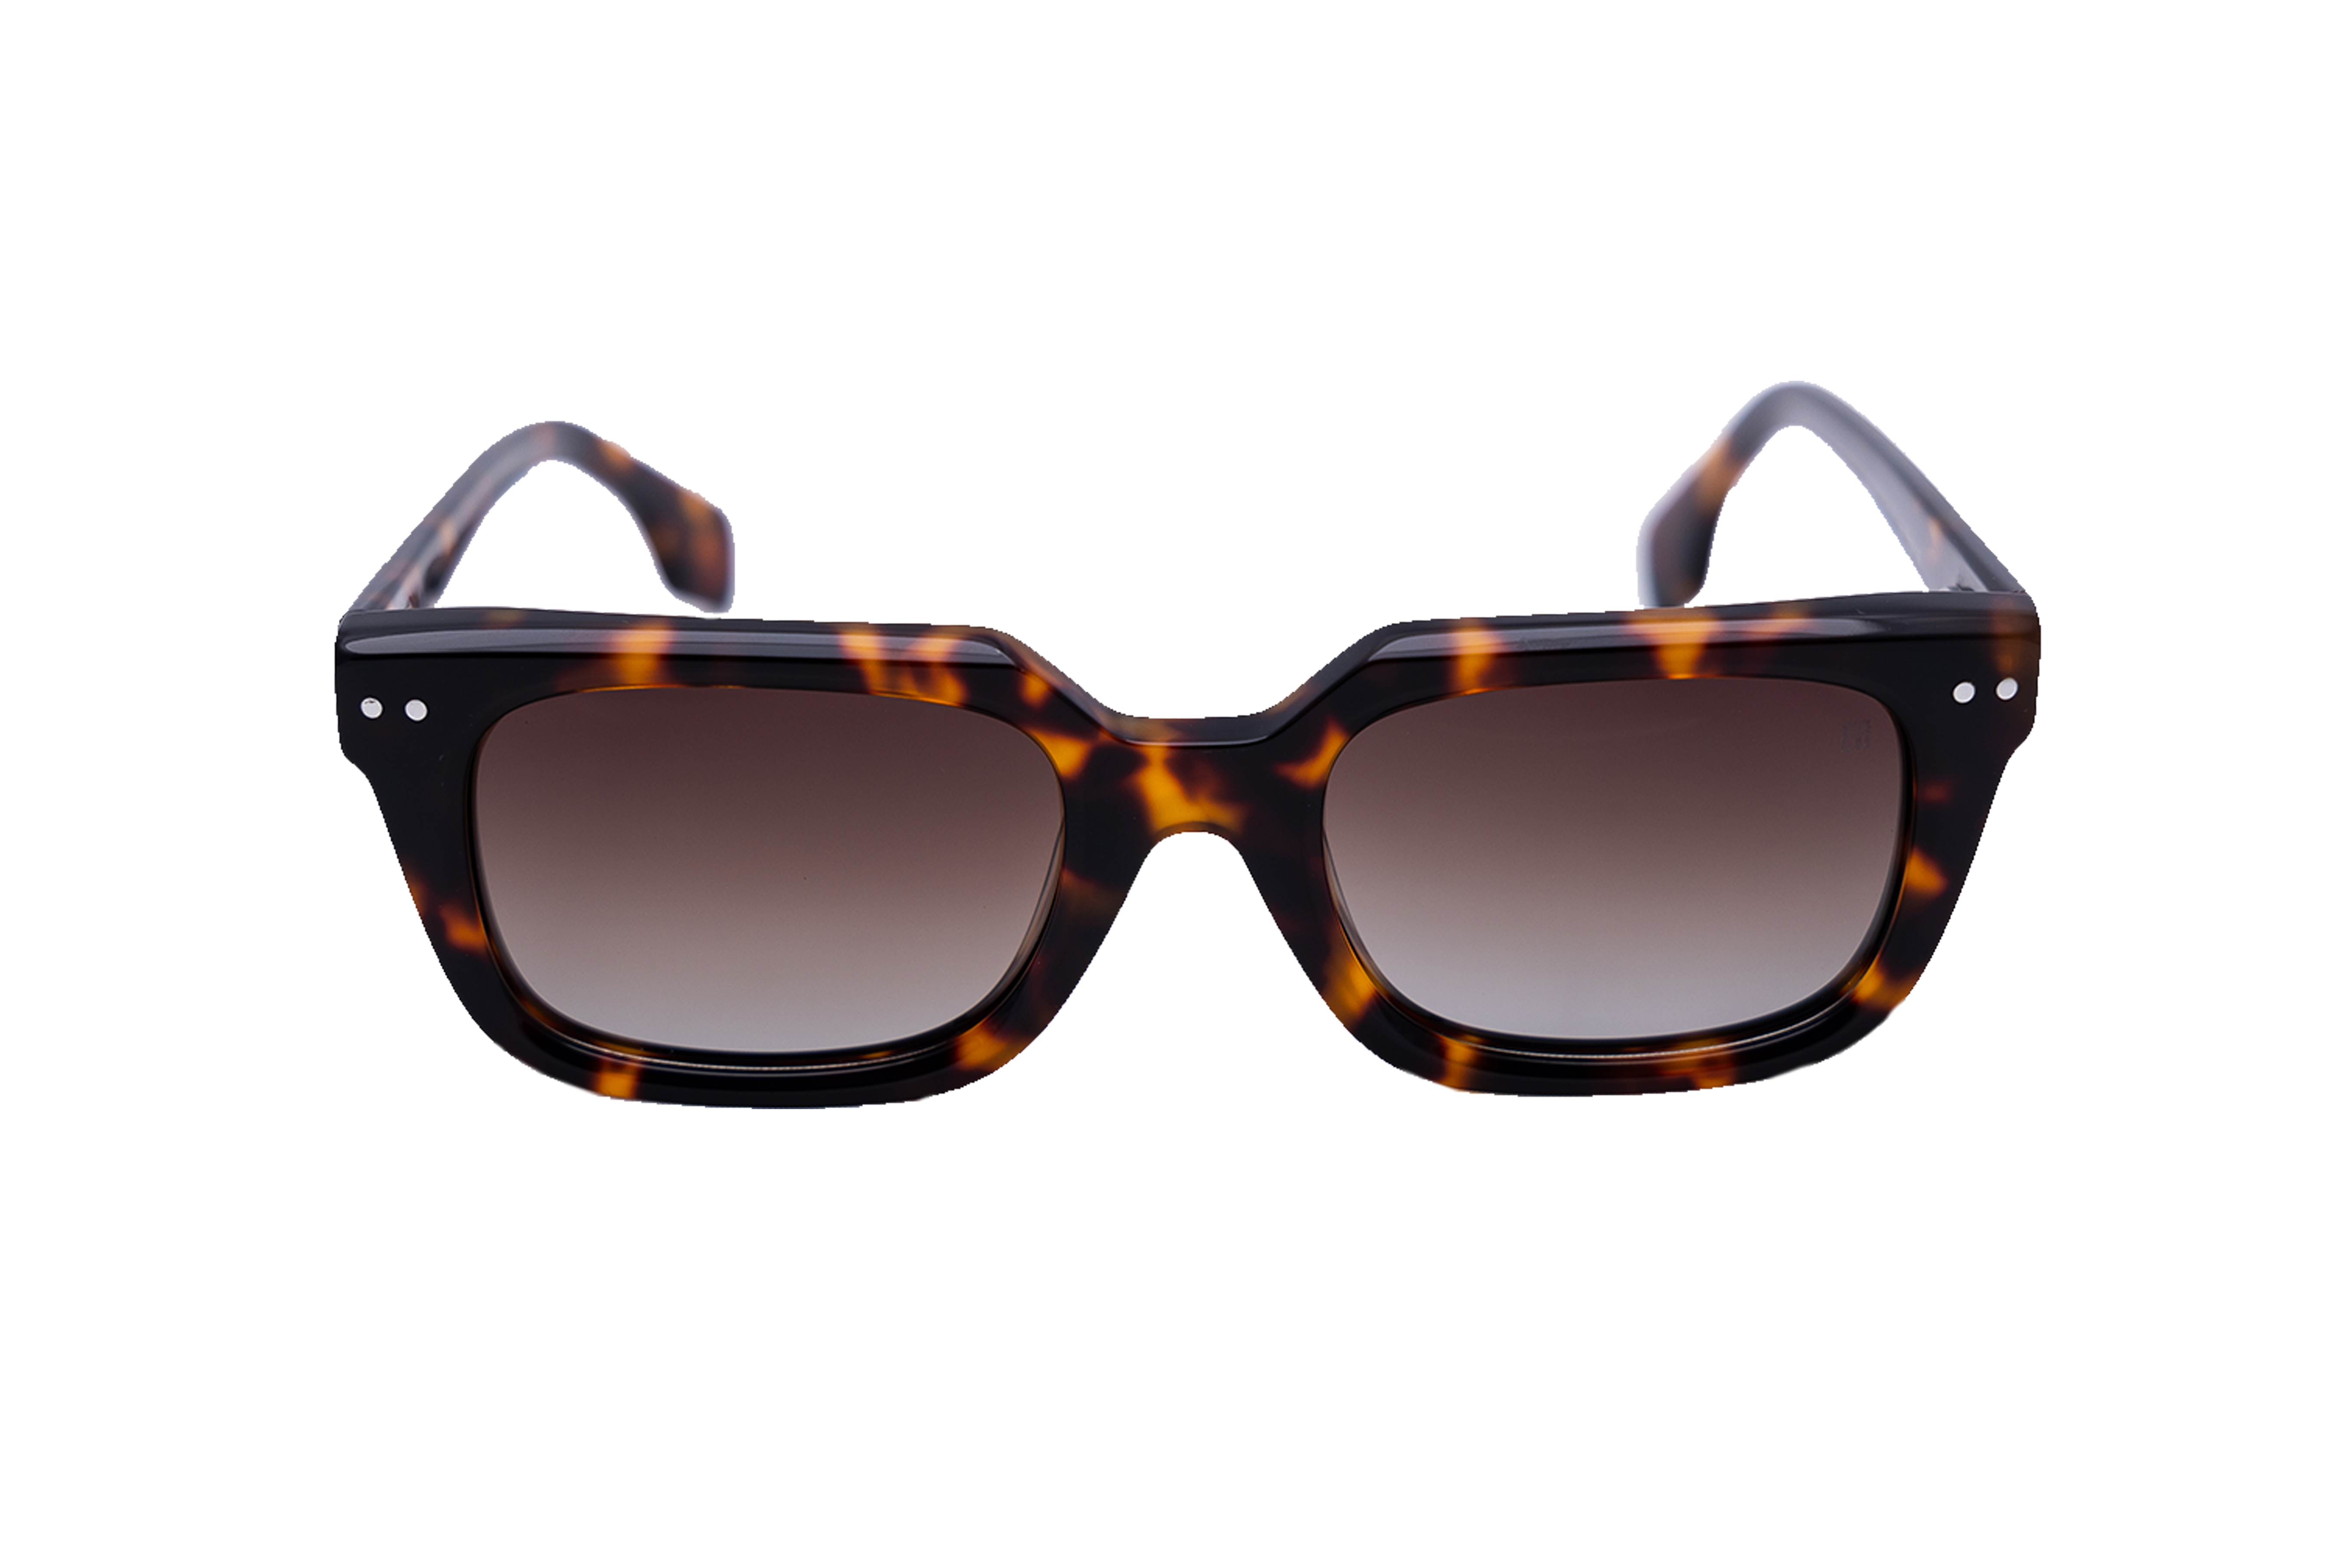 Tomahawk Shades Drifter Class Polarized Sunglasses for Men & Women - Impact Resistant Lenses & Full UV400 Protection